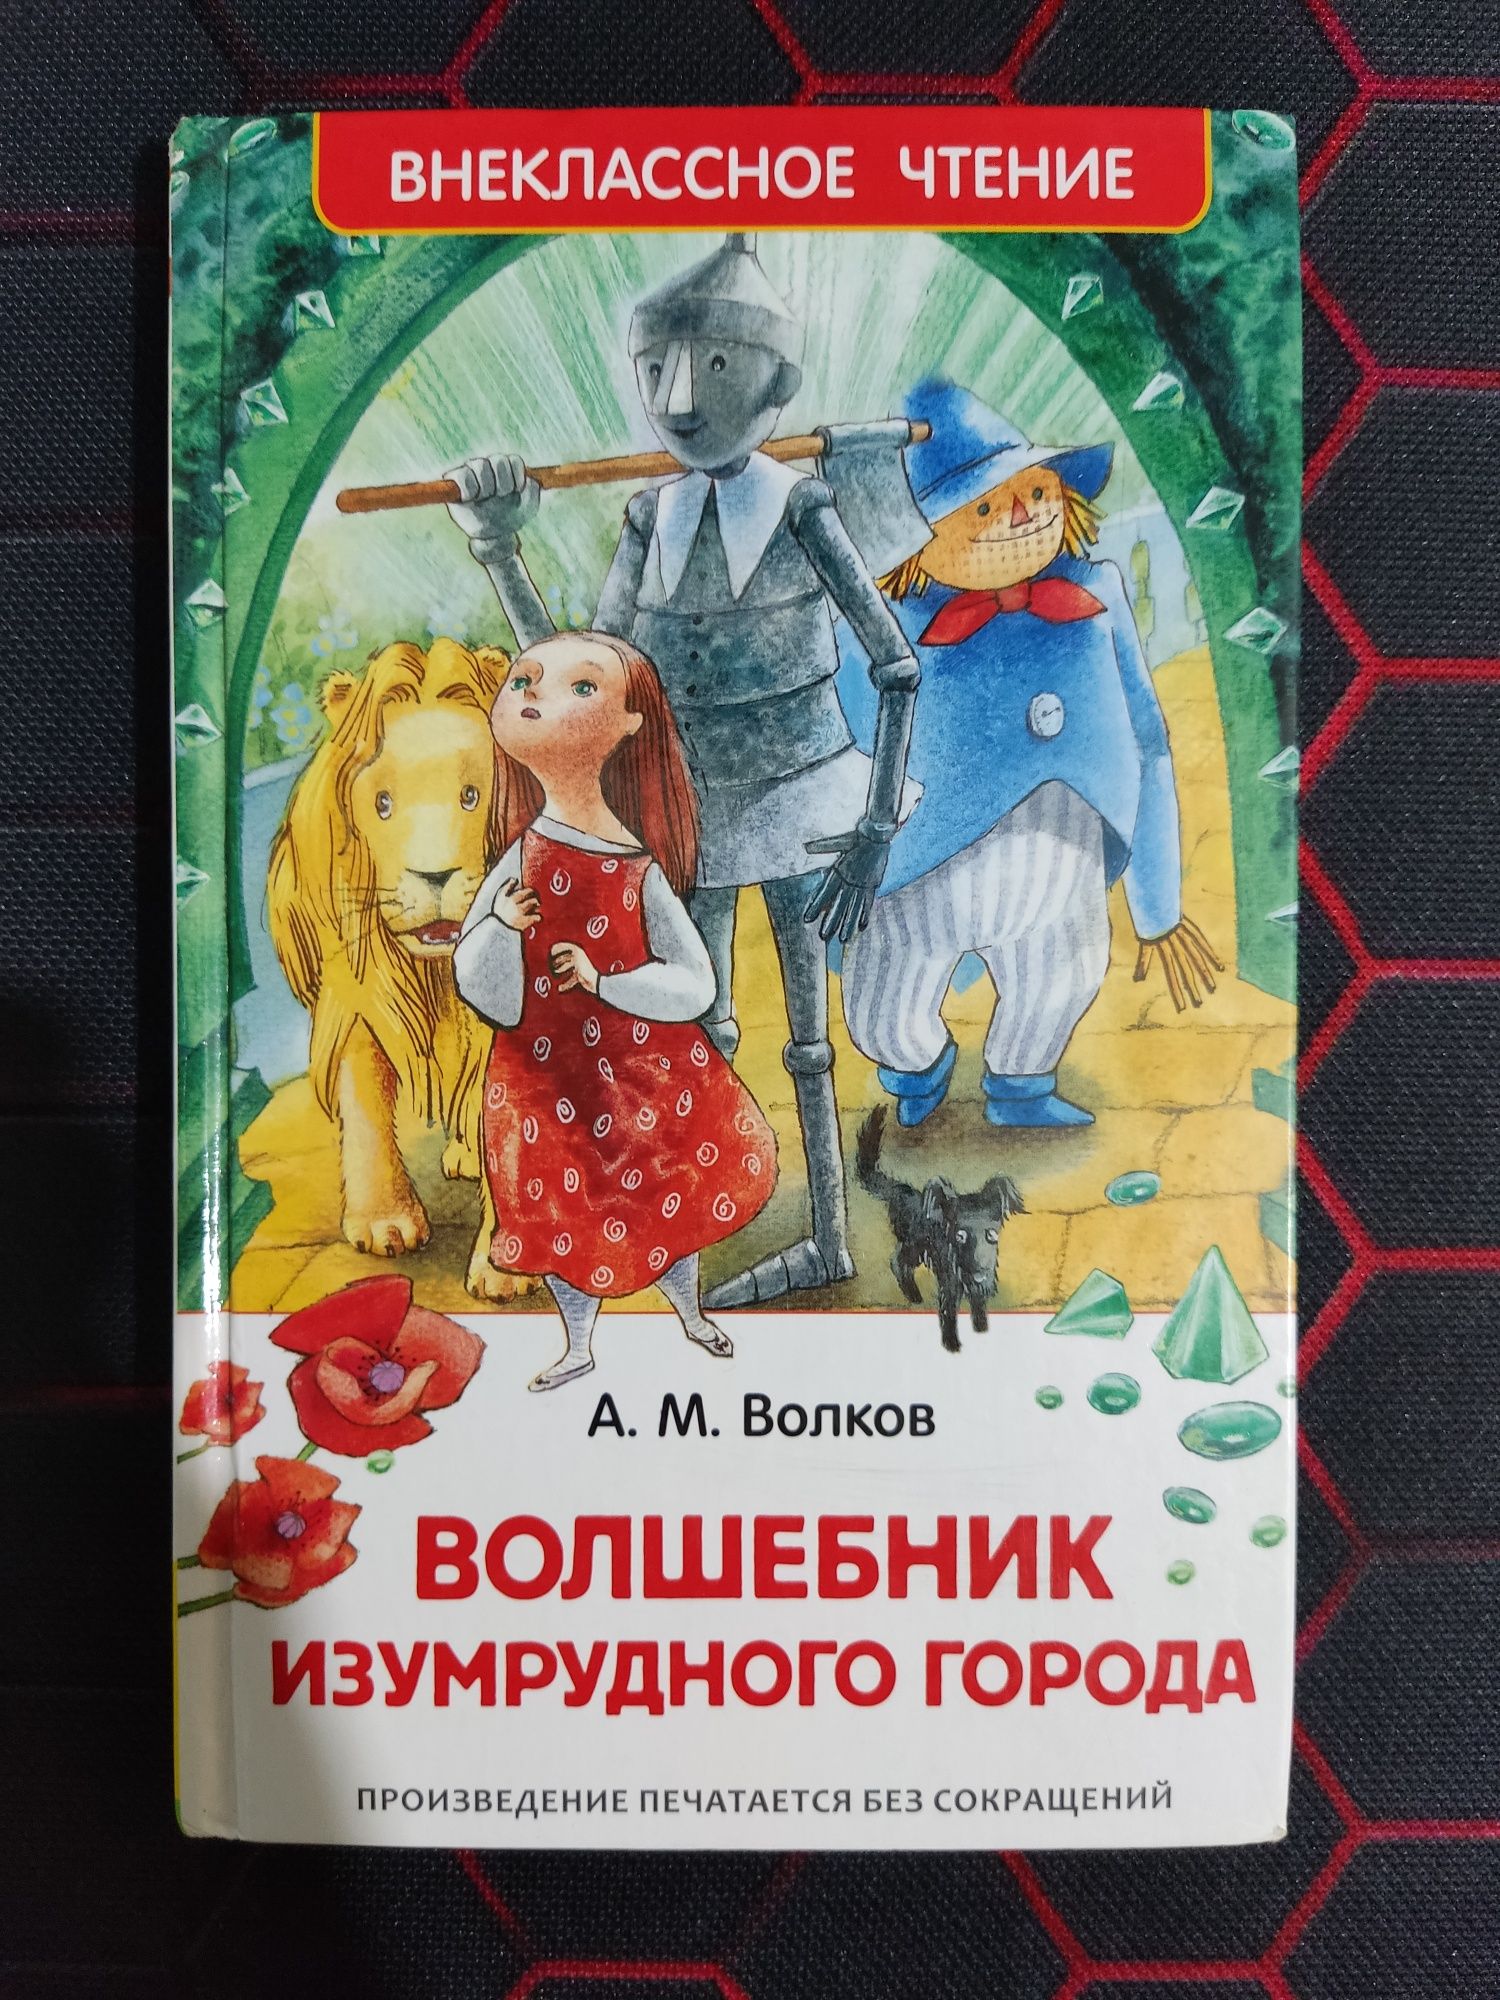 Книги фантази для детей